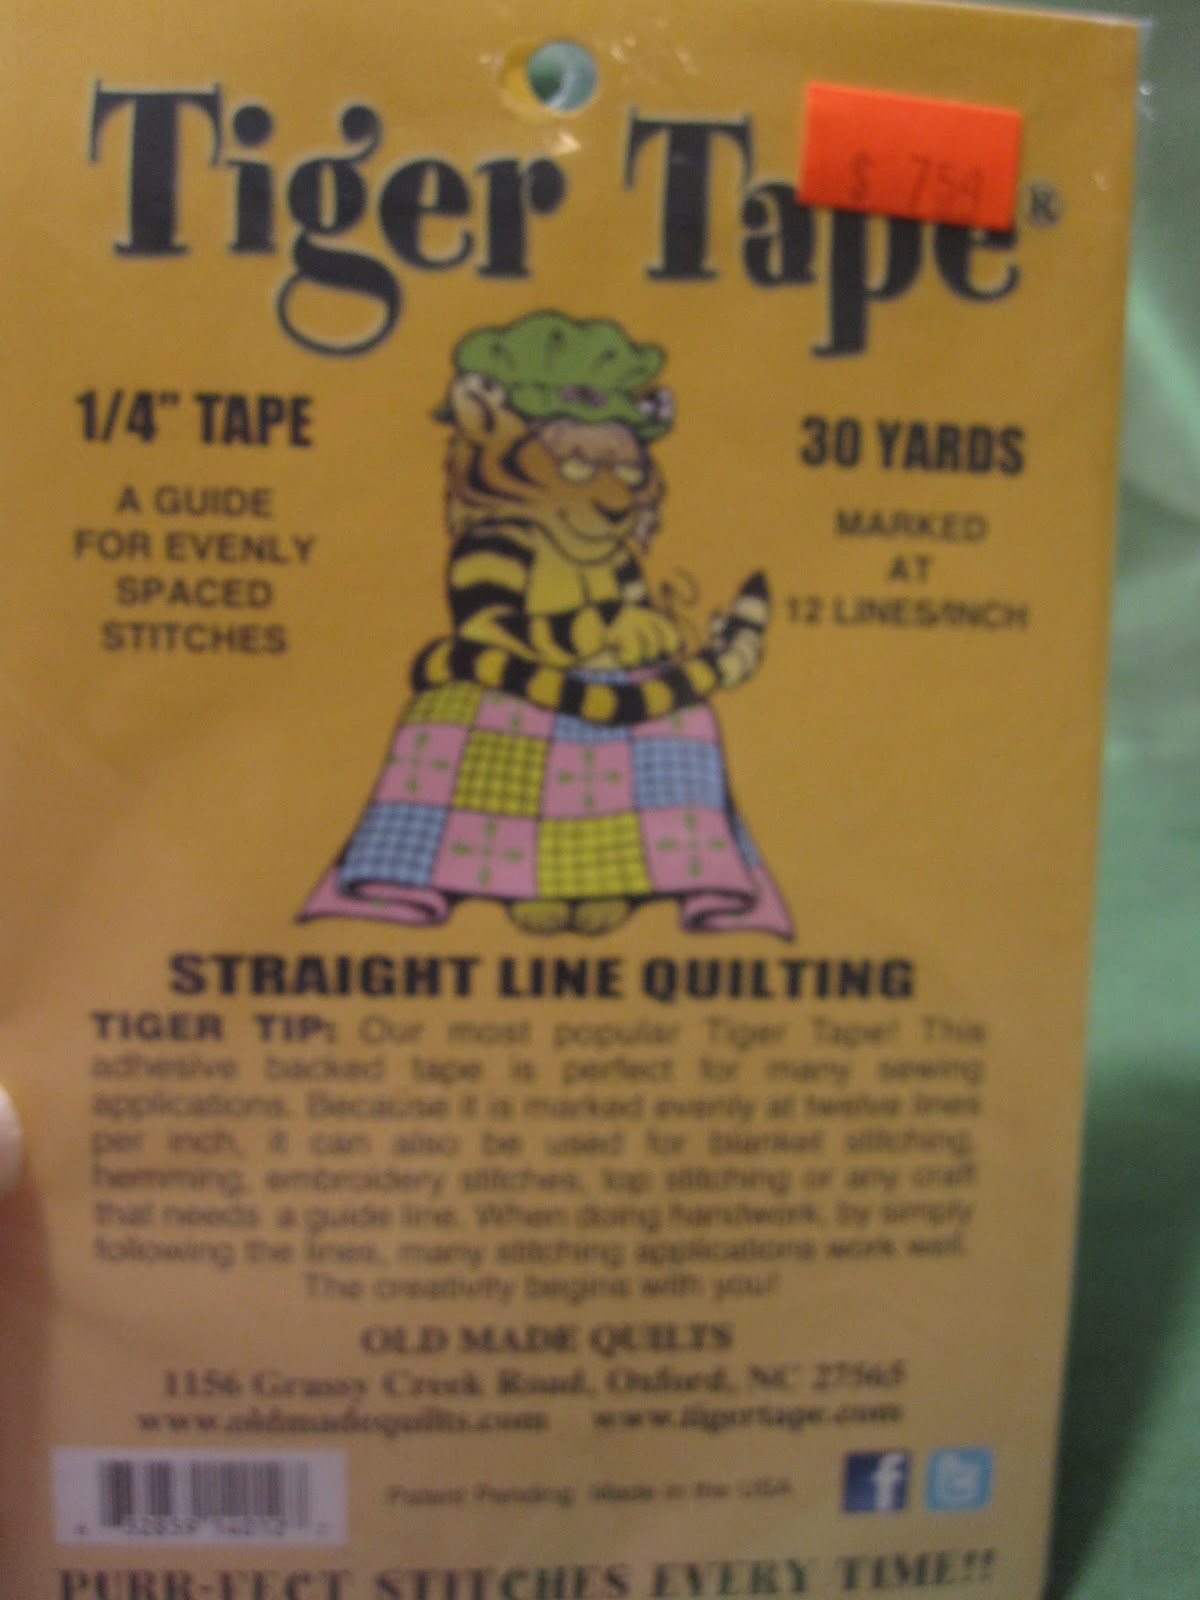 Straight Line Stitching 9 Lines Per 1 Tiger Tape